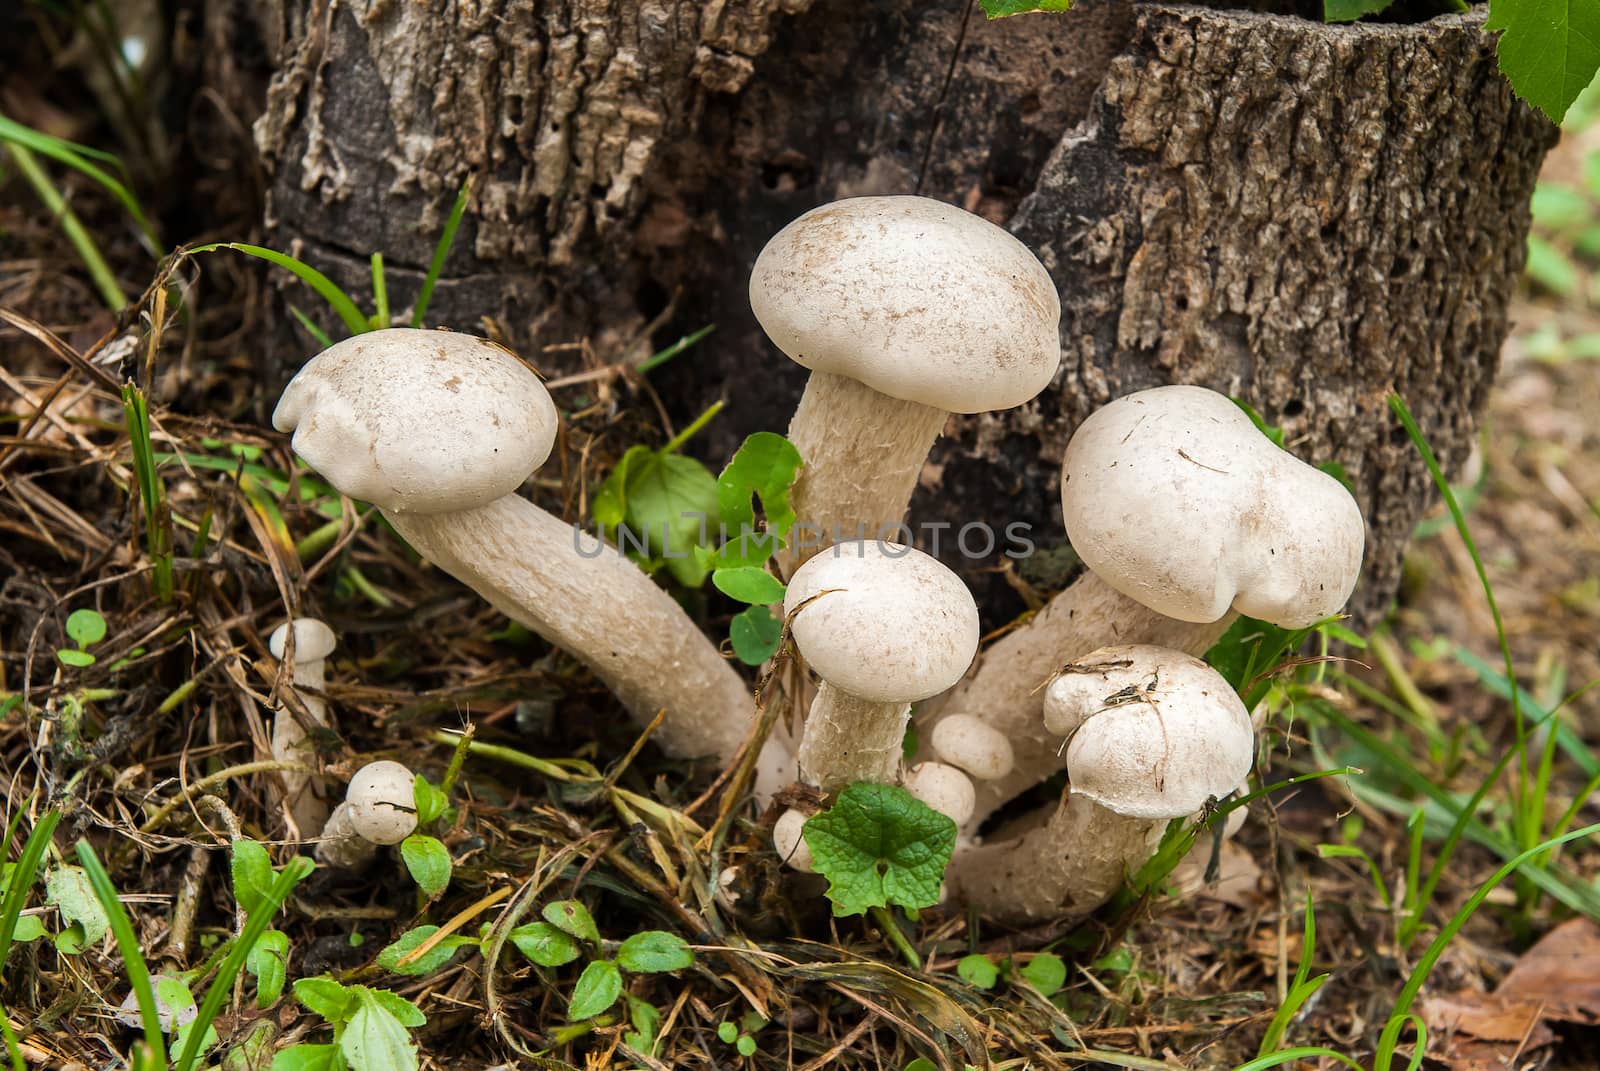 Poisonous mushrooms by seksan44